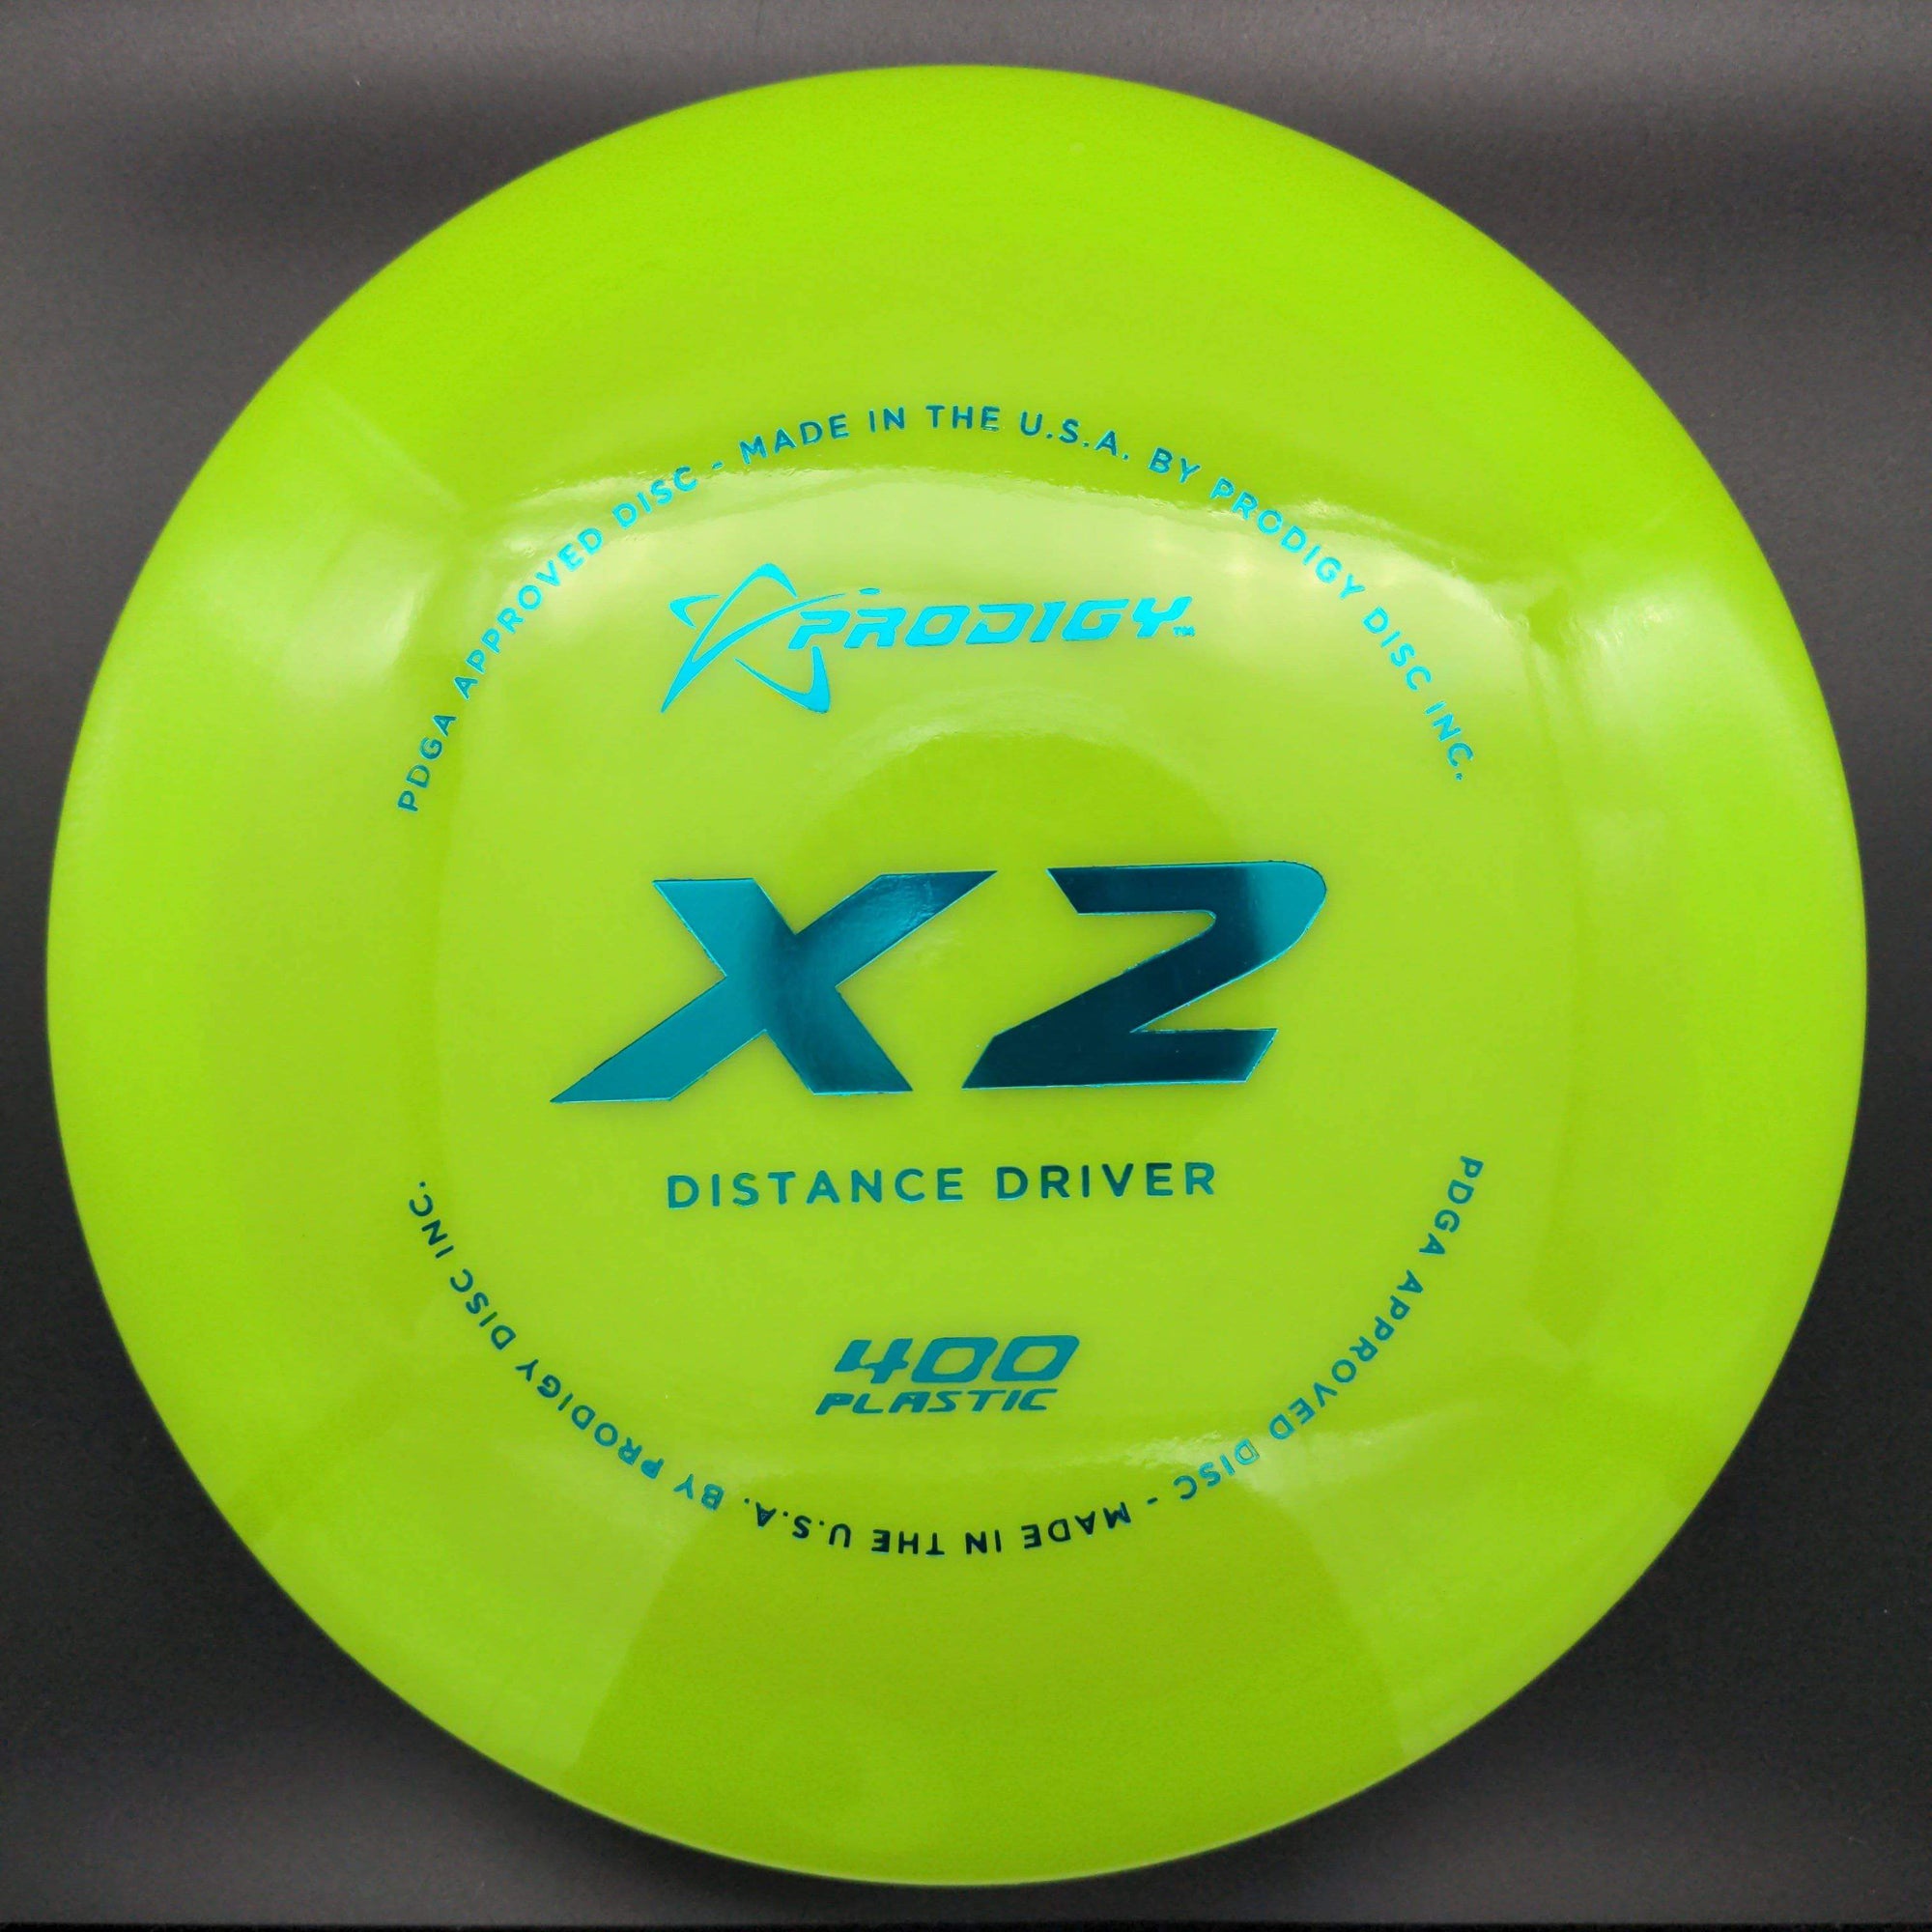 Prodigy Distance Driver X2, 400 Plastic